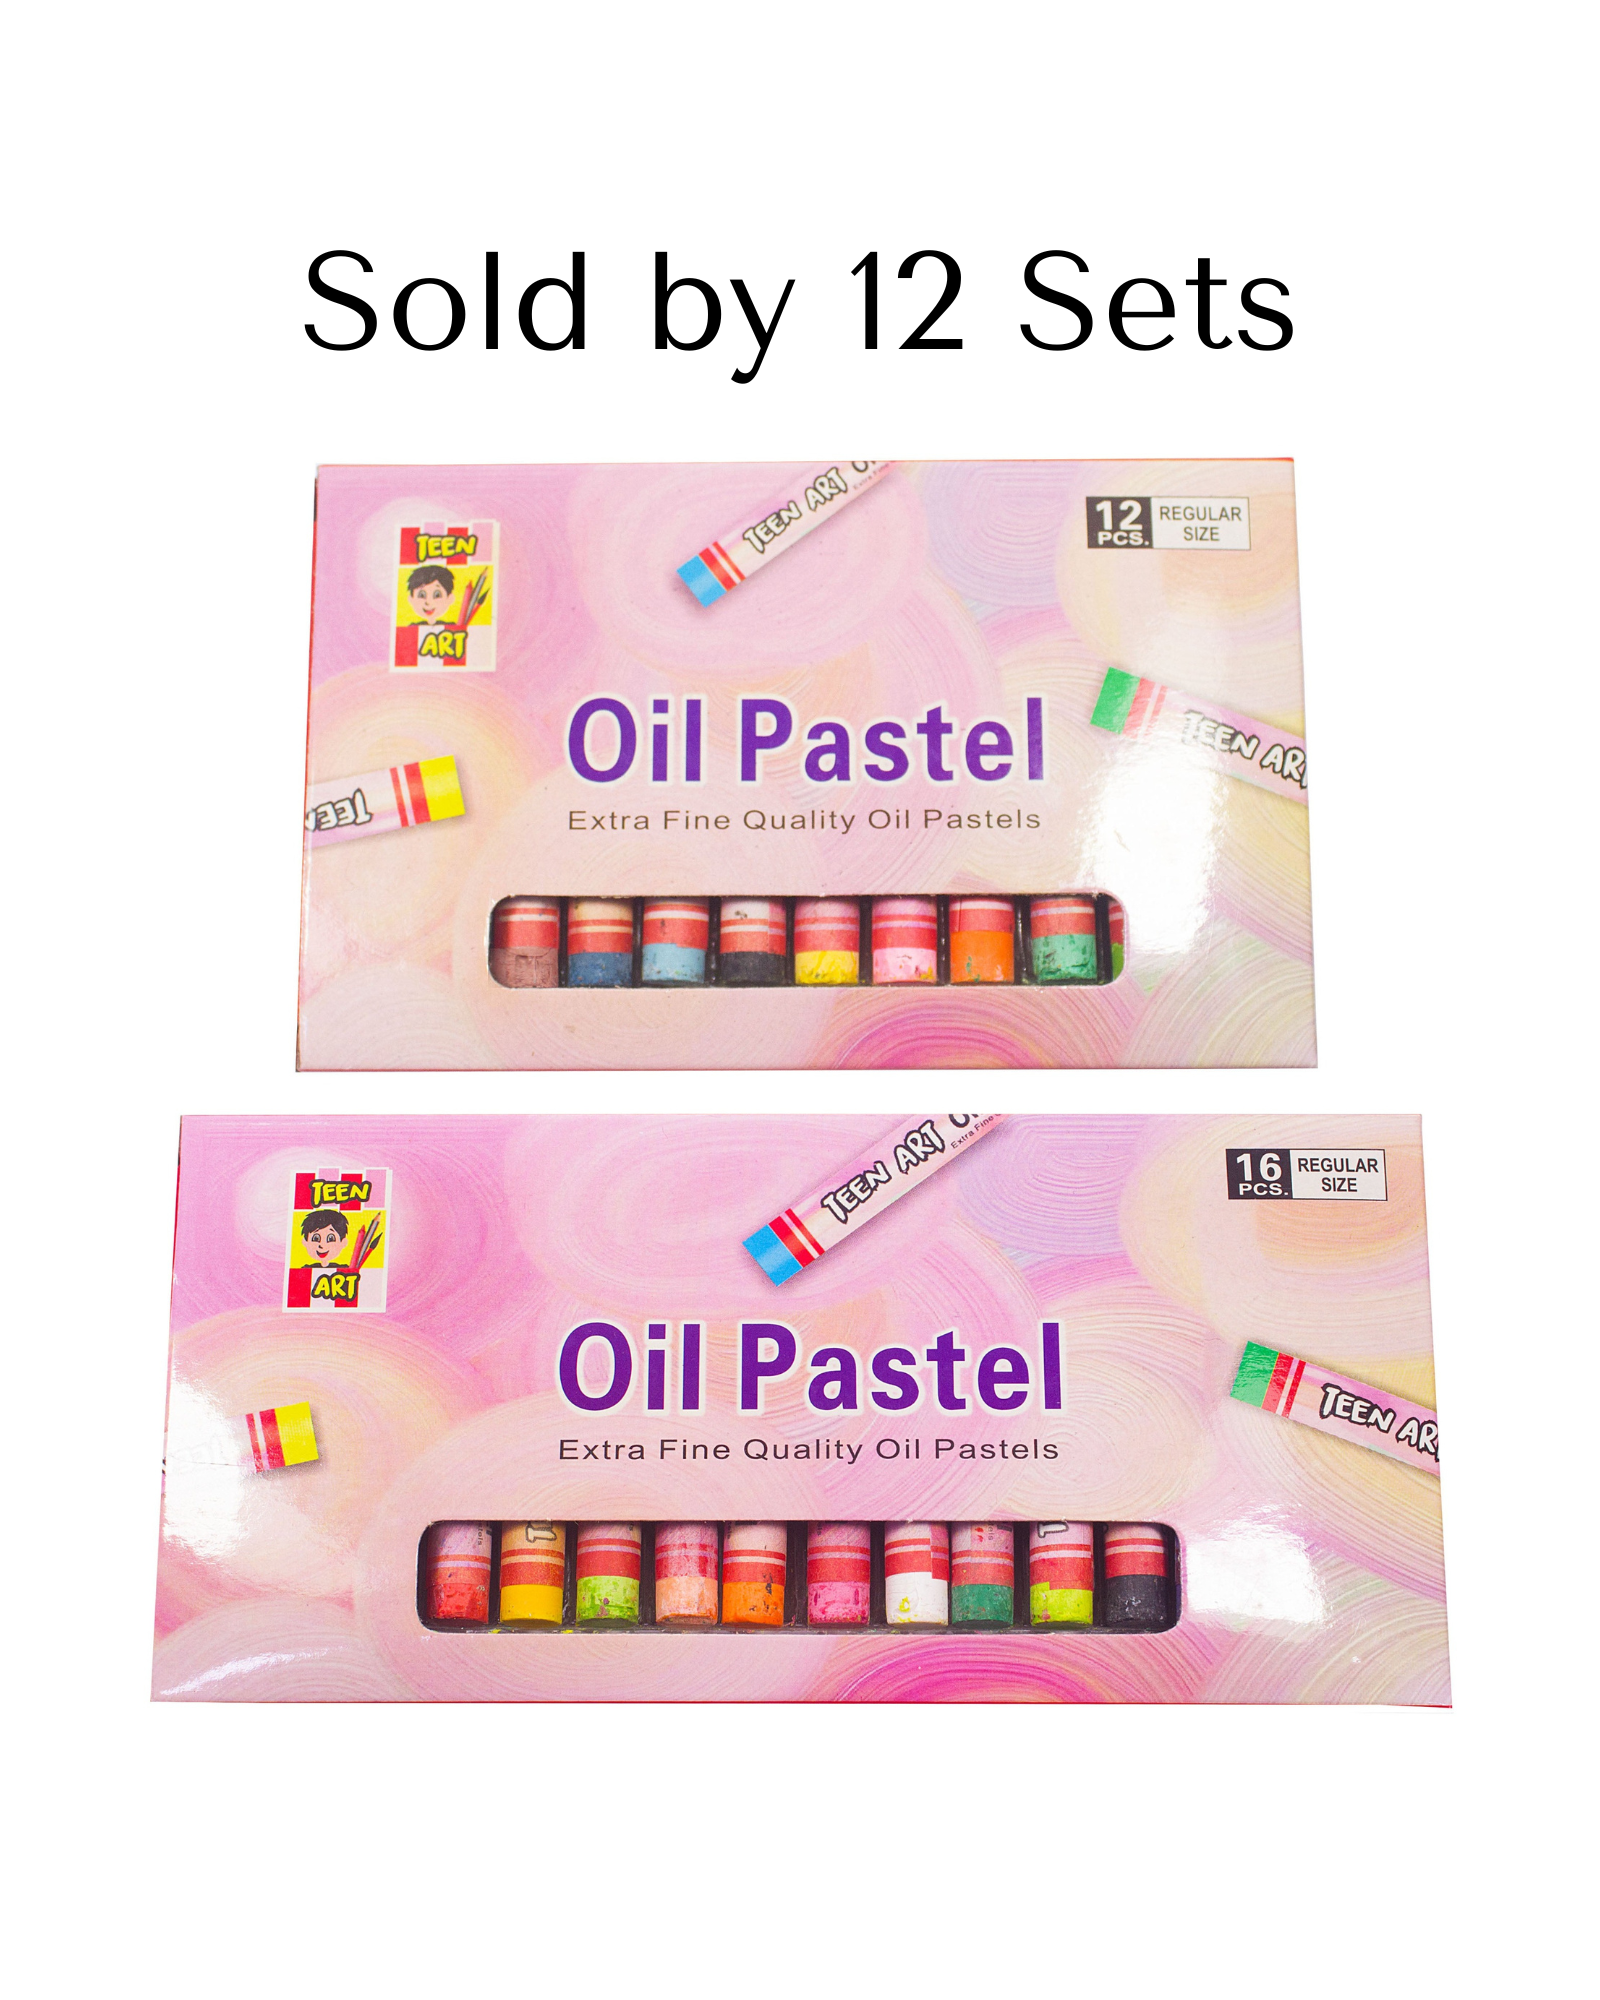 Oil Pastels Online, Advice On Oil Pastel Art